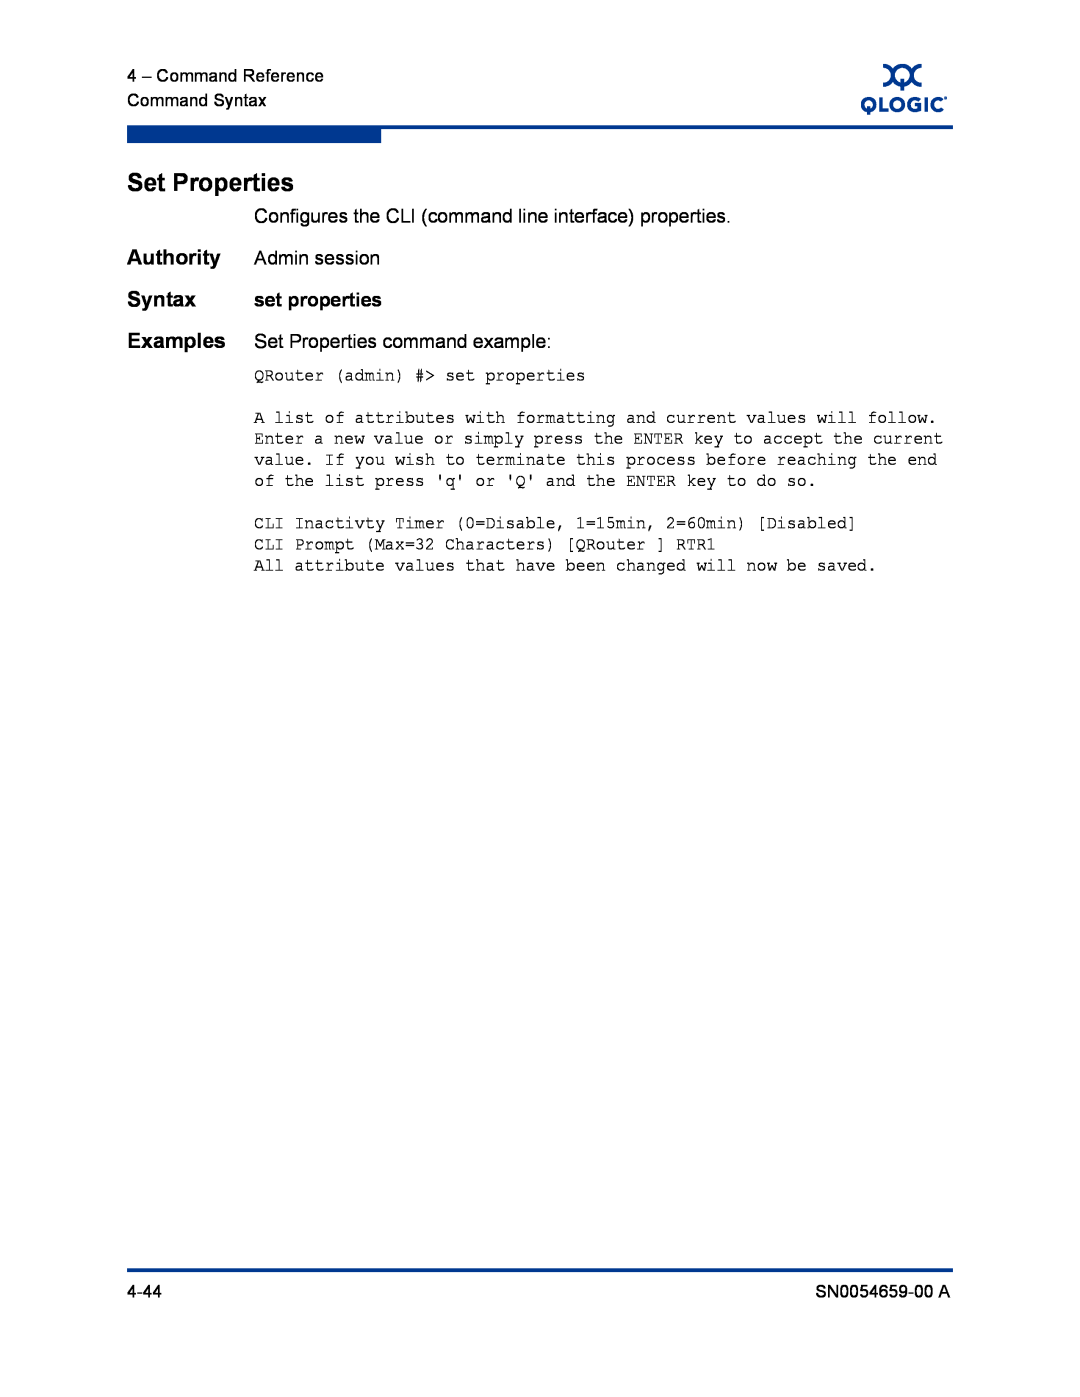 Q-Logic ISR6142 manual Set Properties, Authority, Syntax set properties 